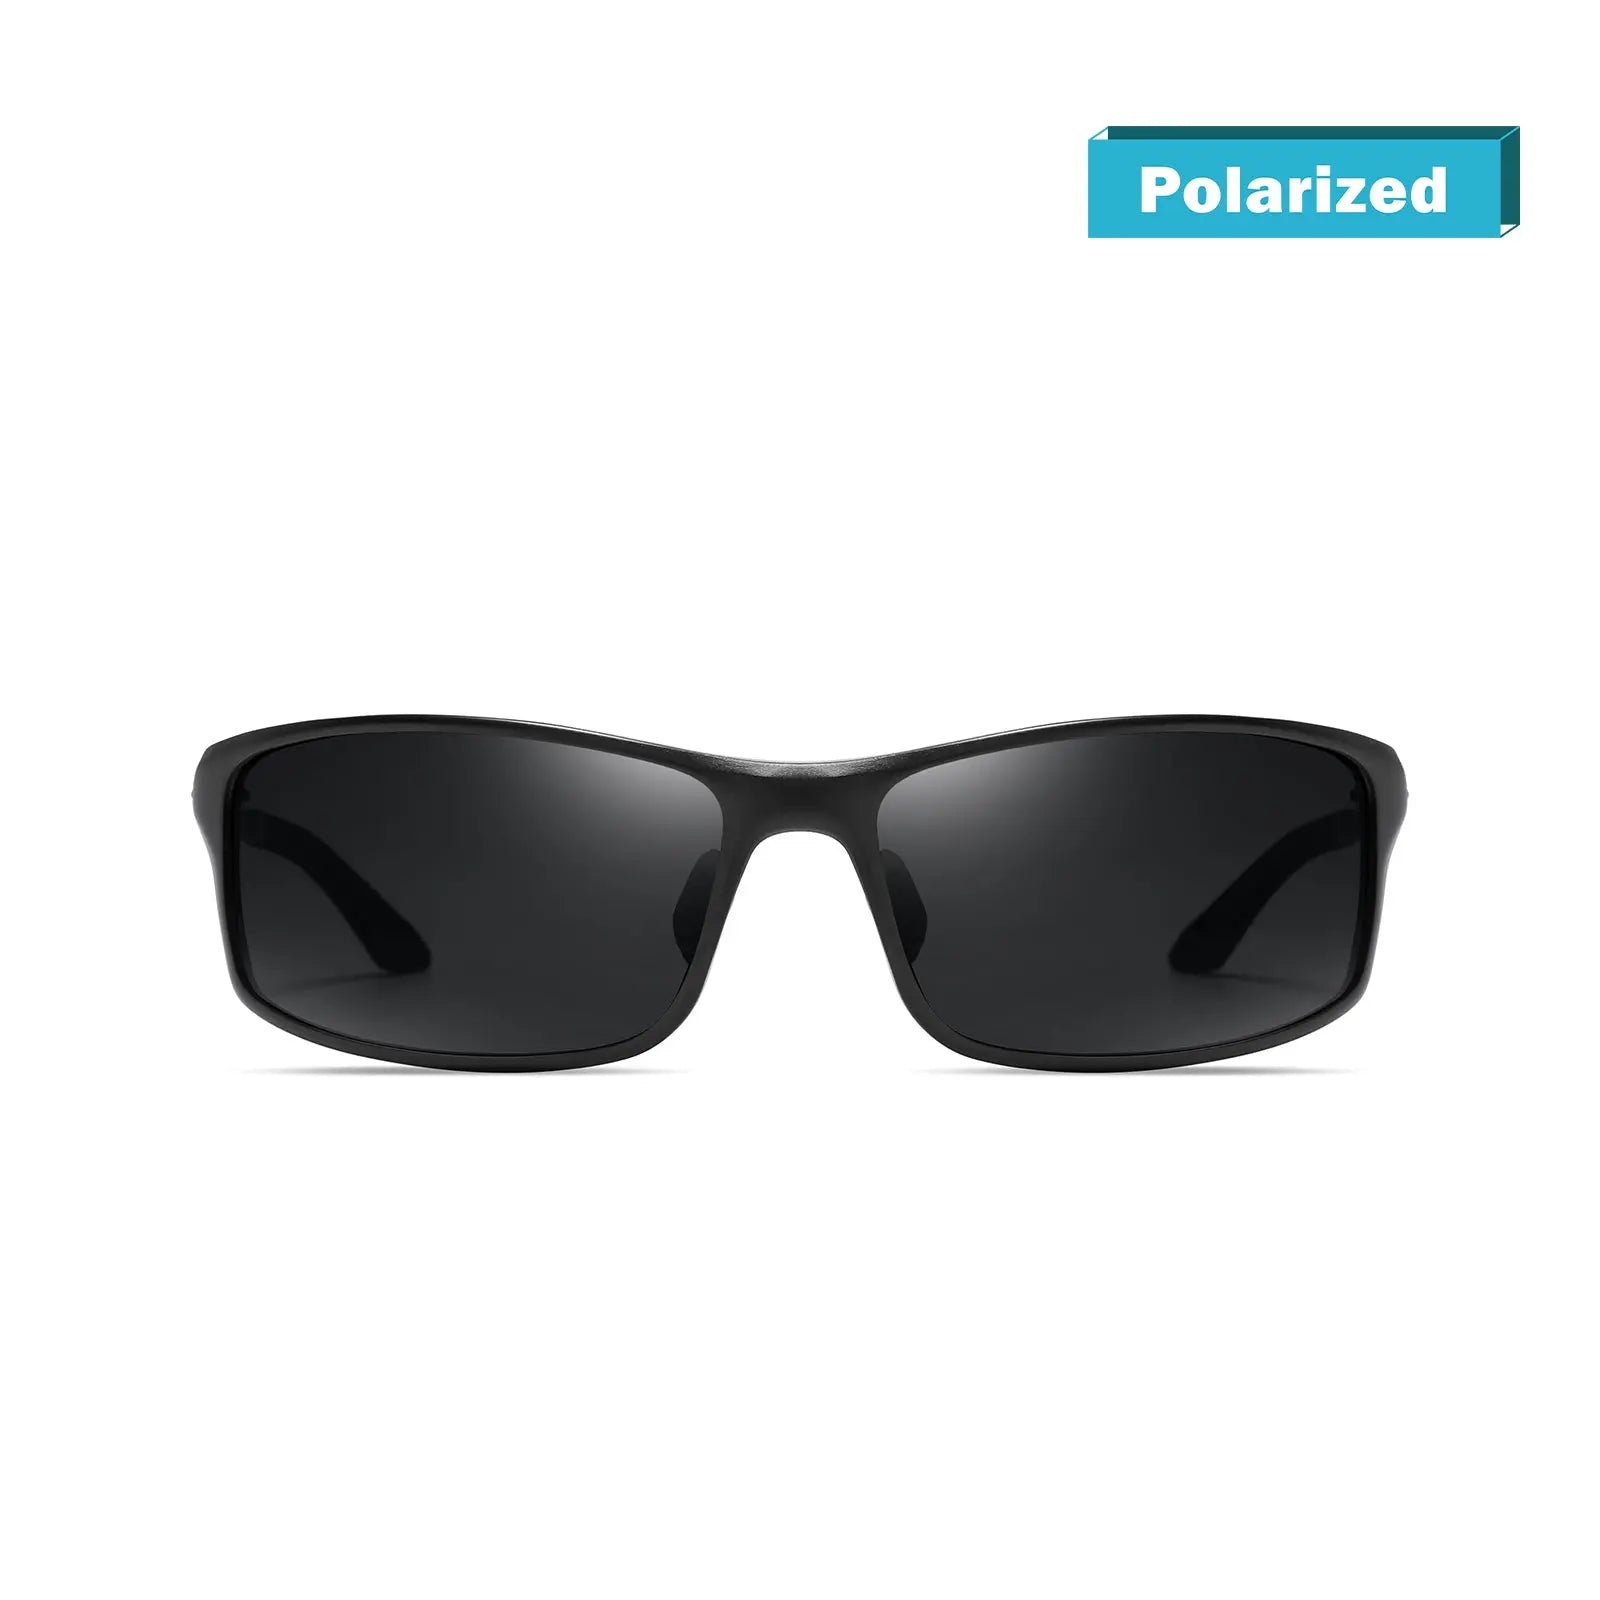 New 100% UV400 Men's Polarized Driving Outdoor Sports Sunglasses Fashion Glasses 